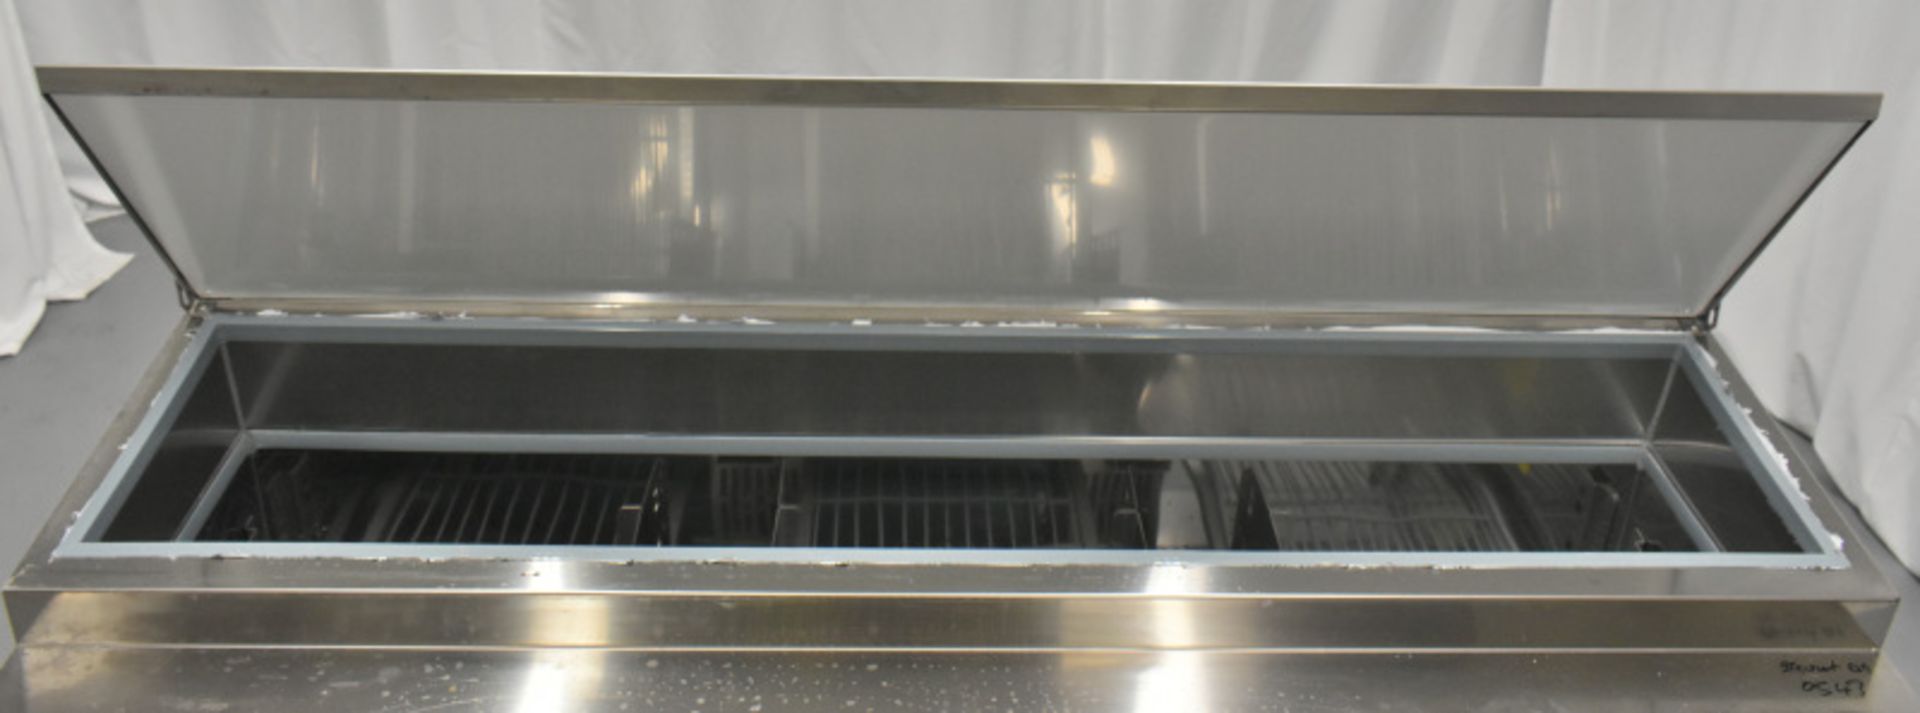 Polar 3 Door Refrigerated Pizza & Salad Prep Counter - Model G605 Serial No.G605 21085737 - Image 5 of 12